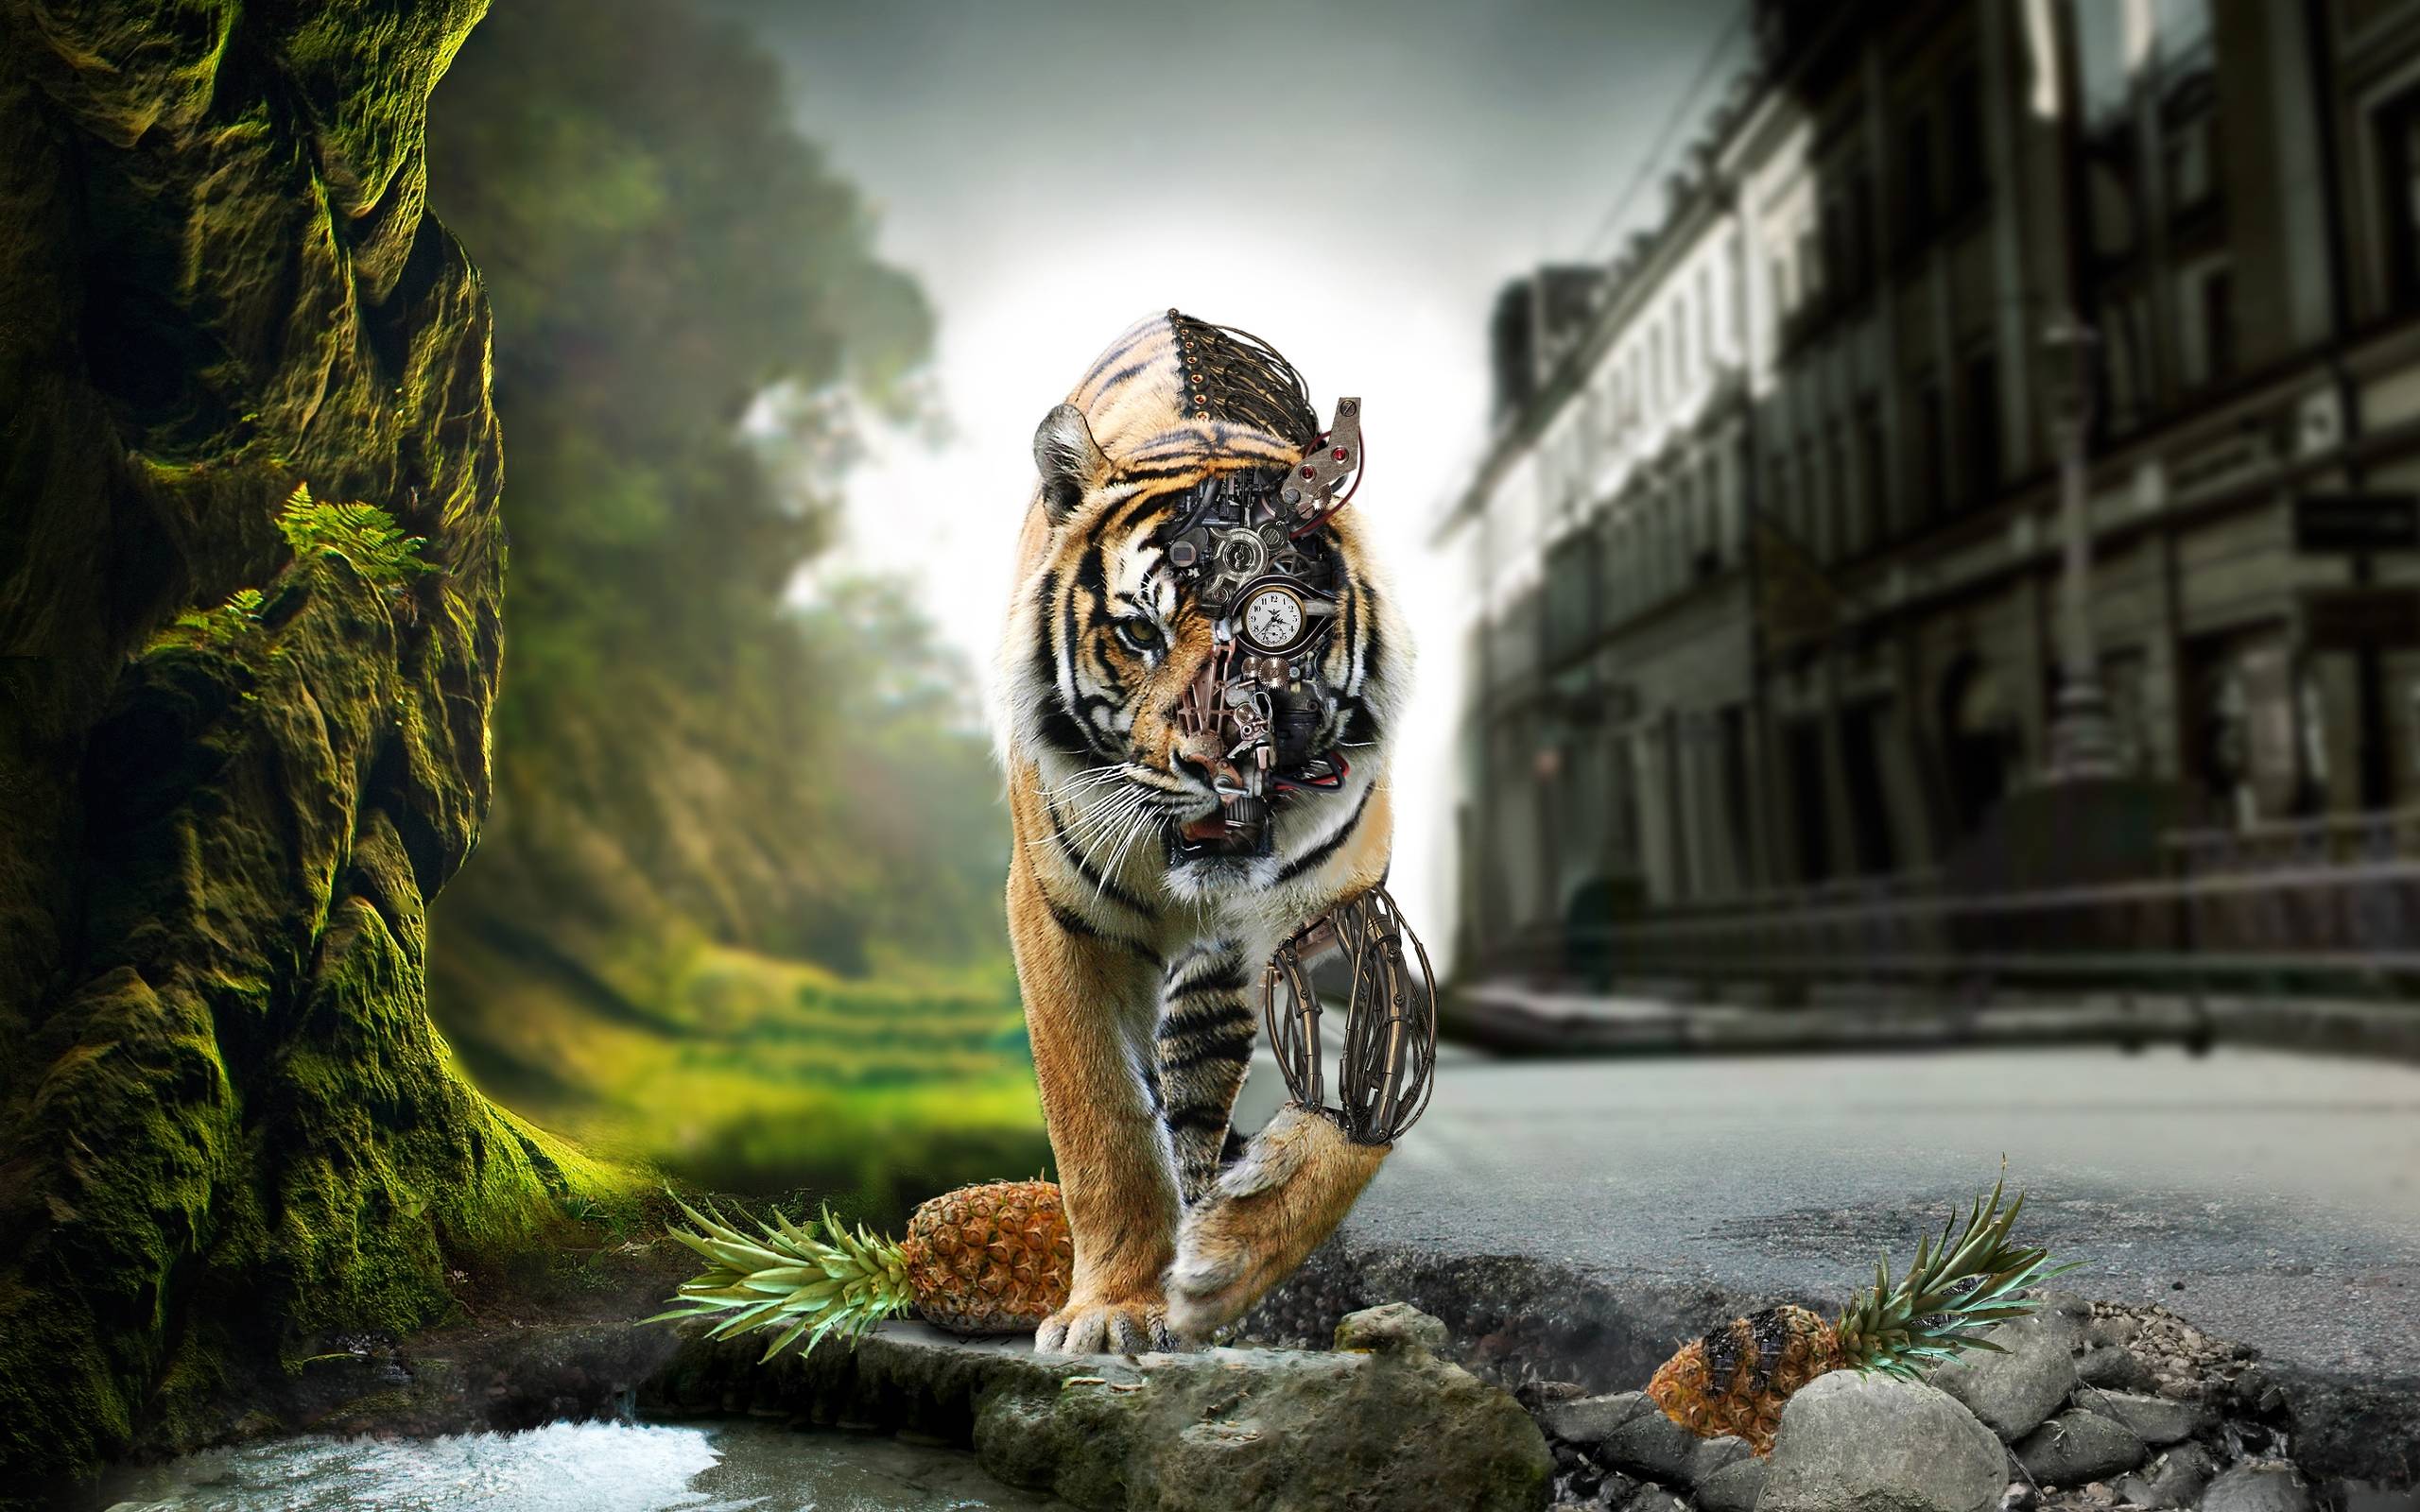 Wallpapers mechanical tiger gear tiger walk on the desktop